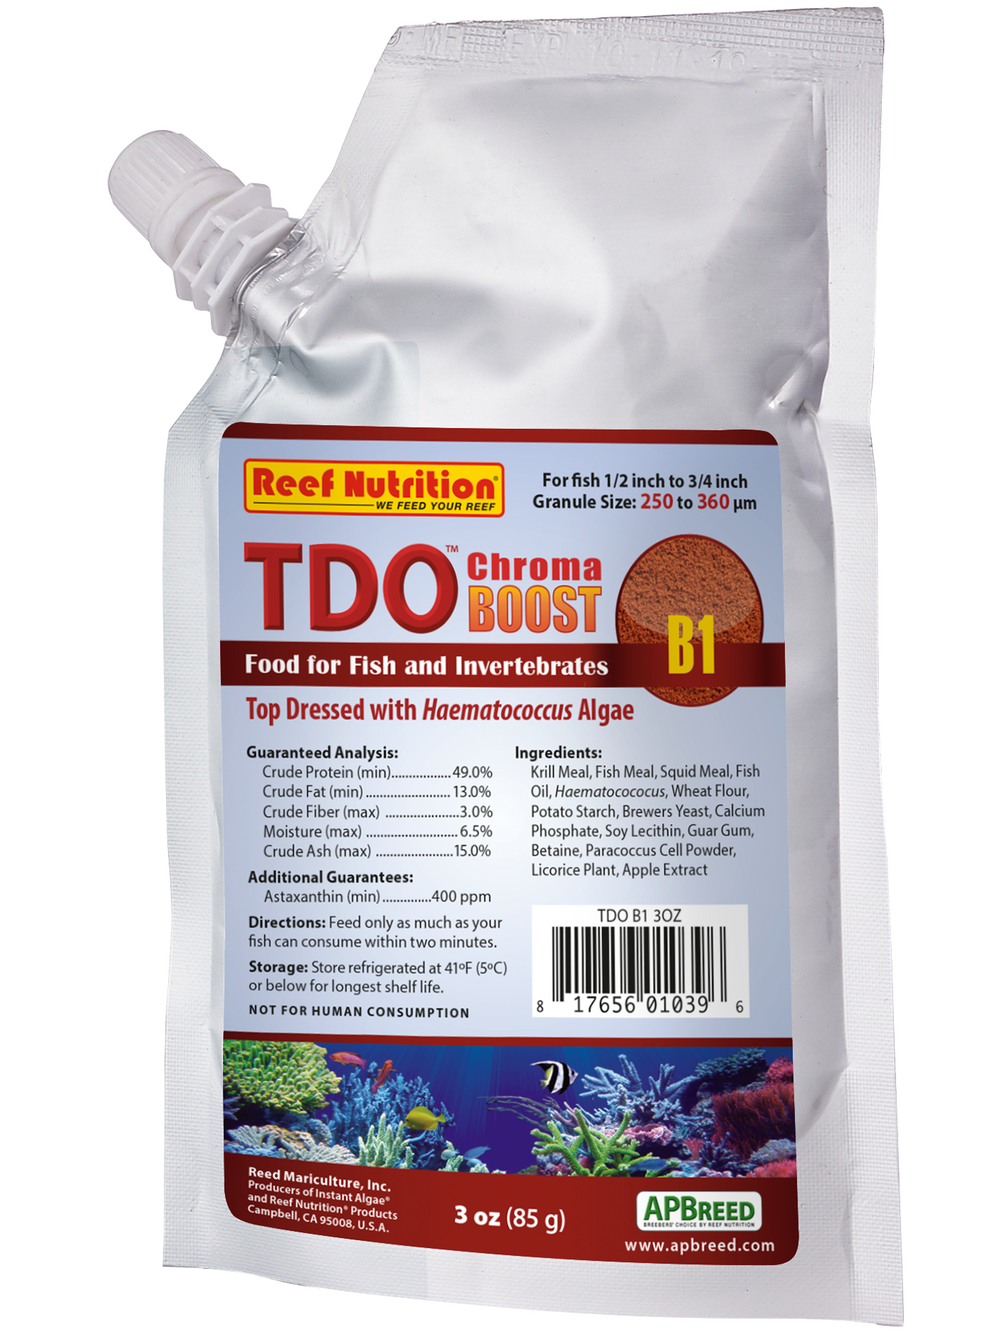 Reef Nutrition TDO Chroma Boost Food